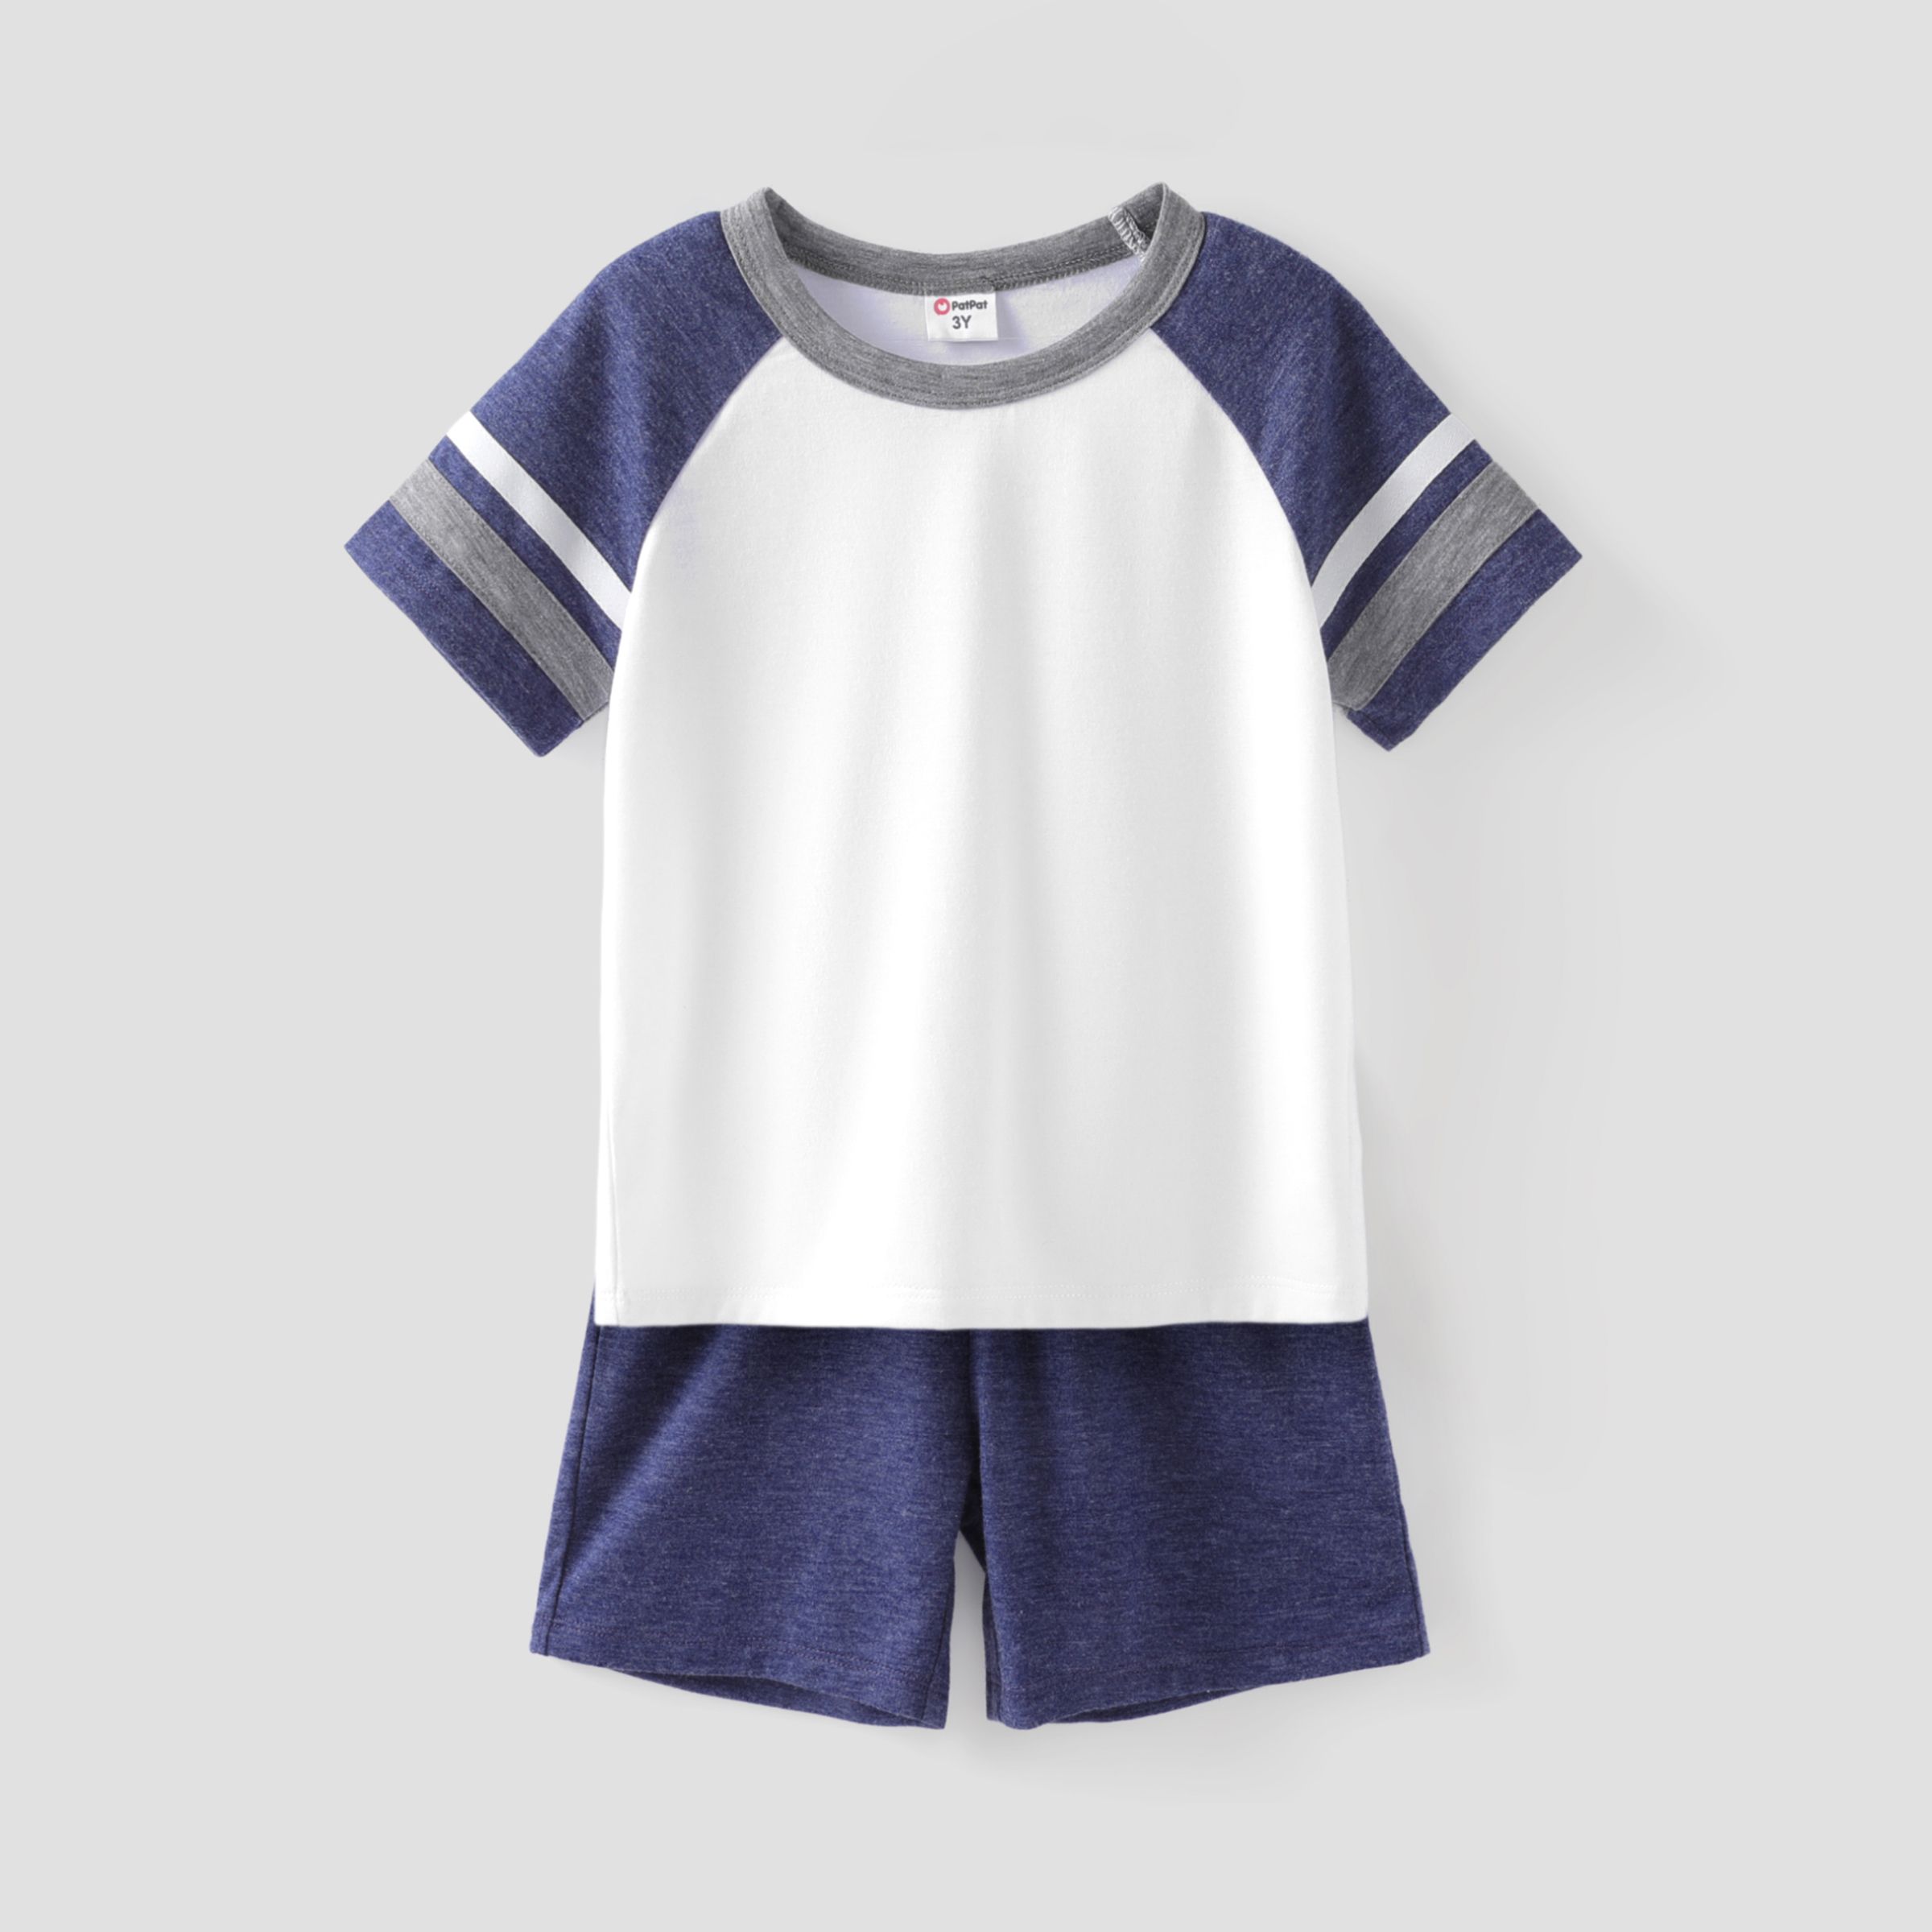 Toddler Boy 2pcs Colorblock Tee and Shorts Set